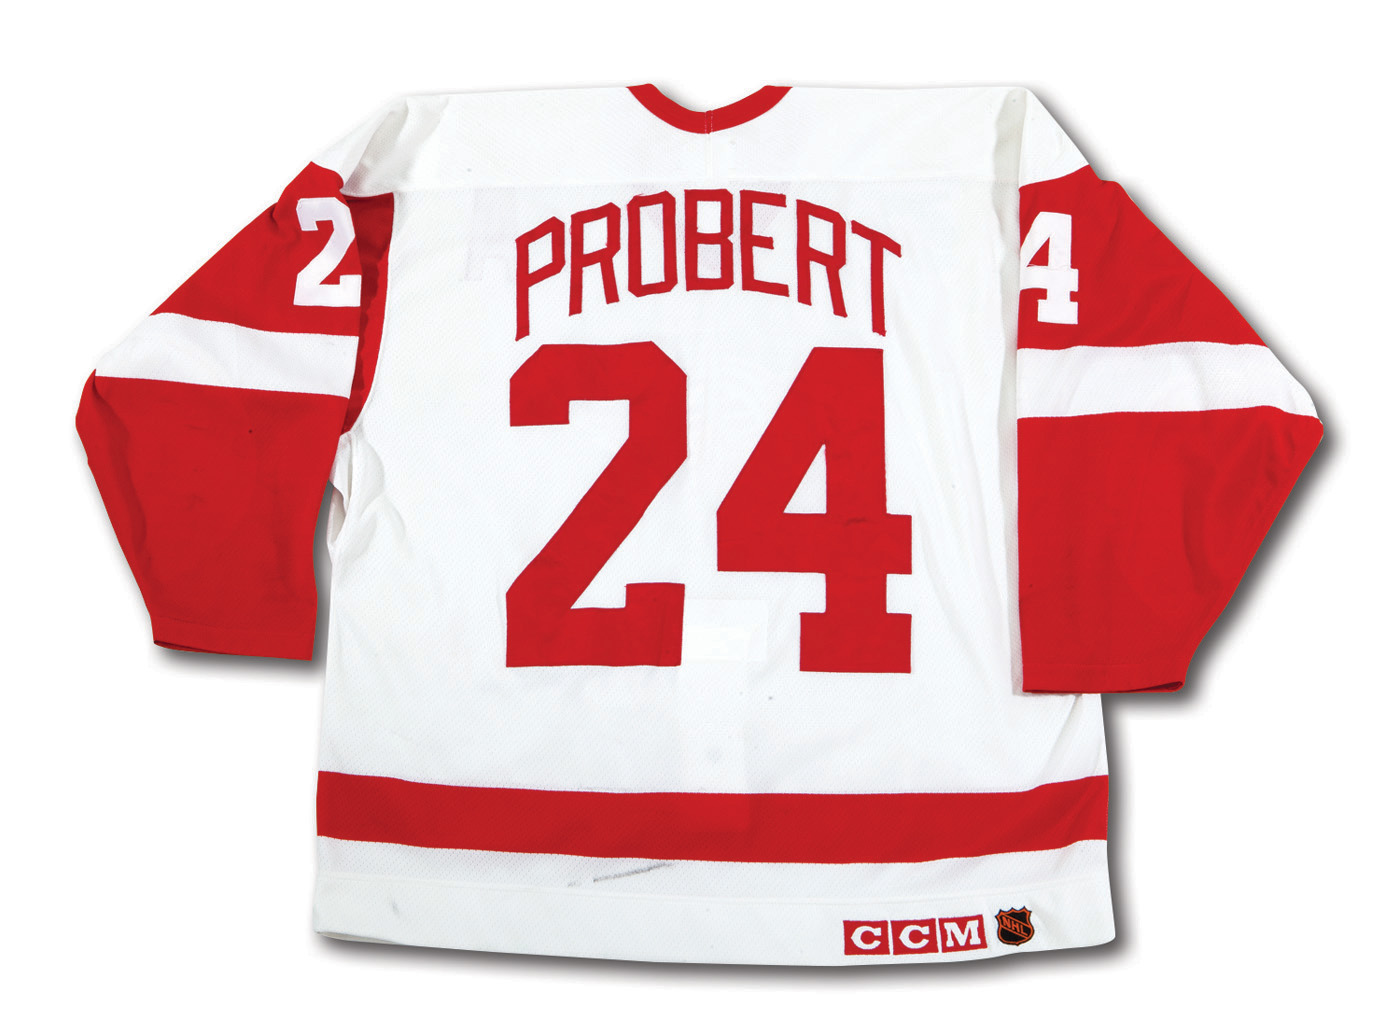 🚨 Bob Probert 1991-92 Stadium Club Topps #59 Detroit RED WINGS💥🏒